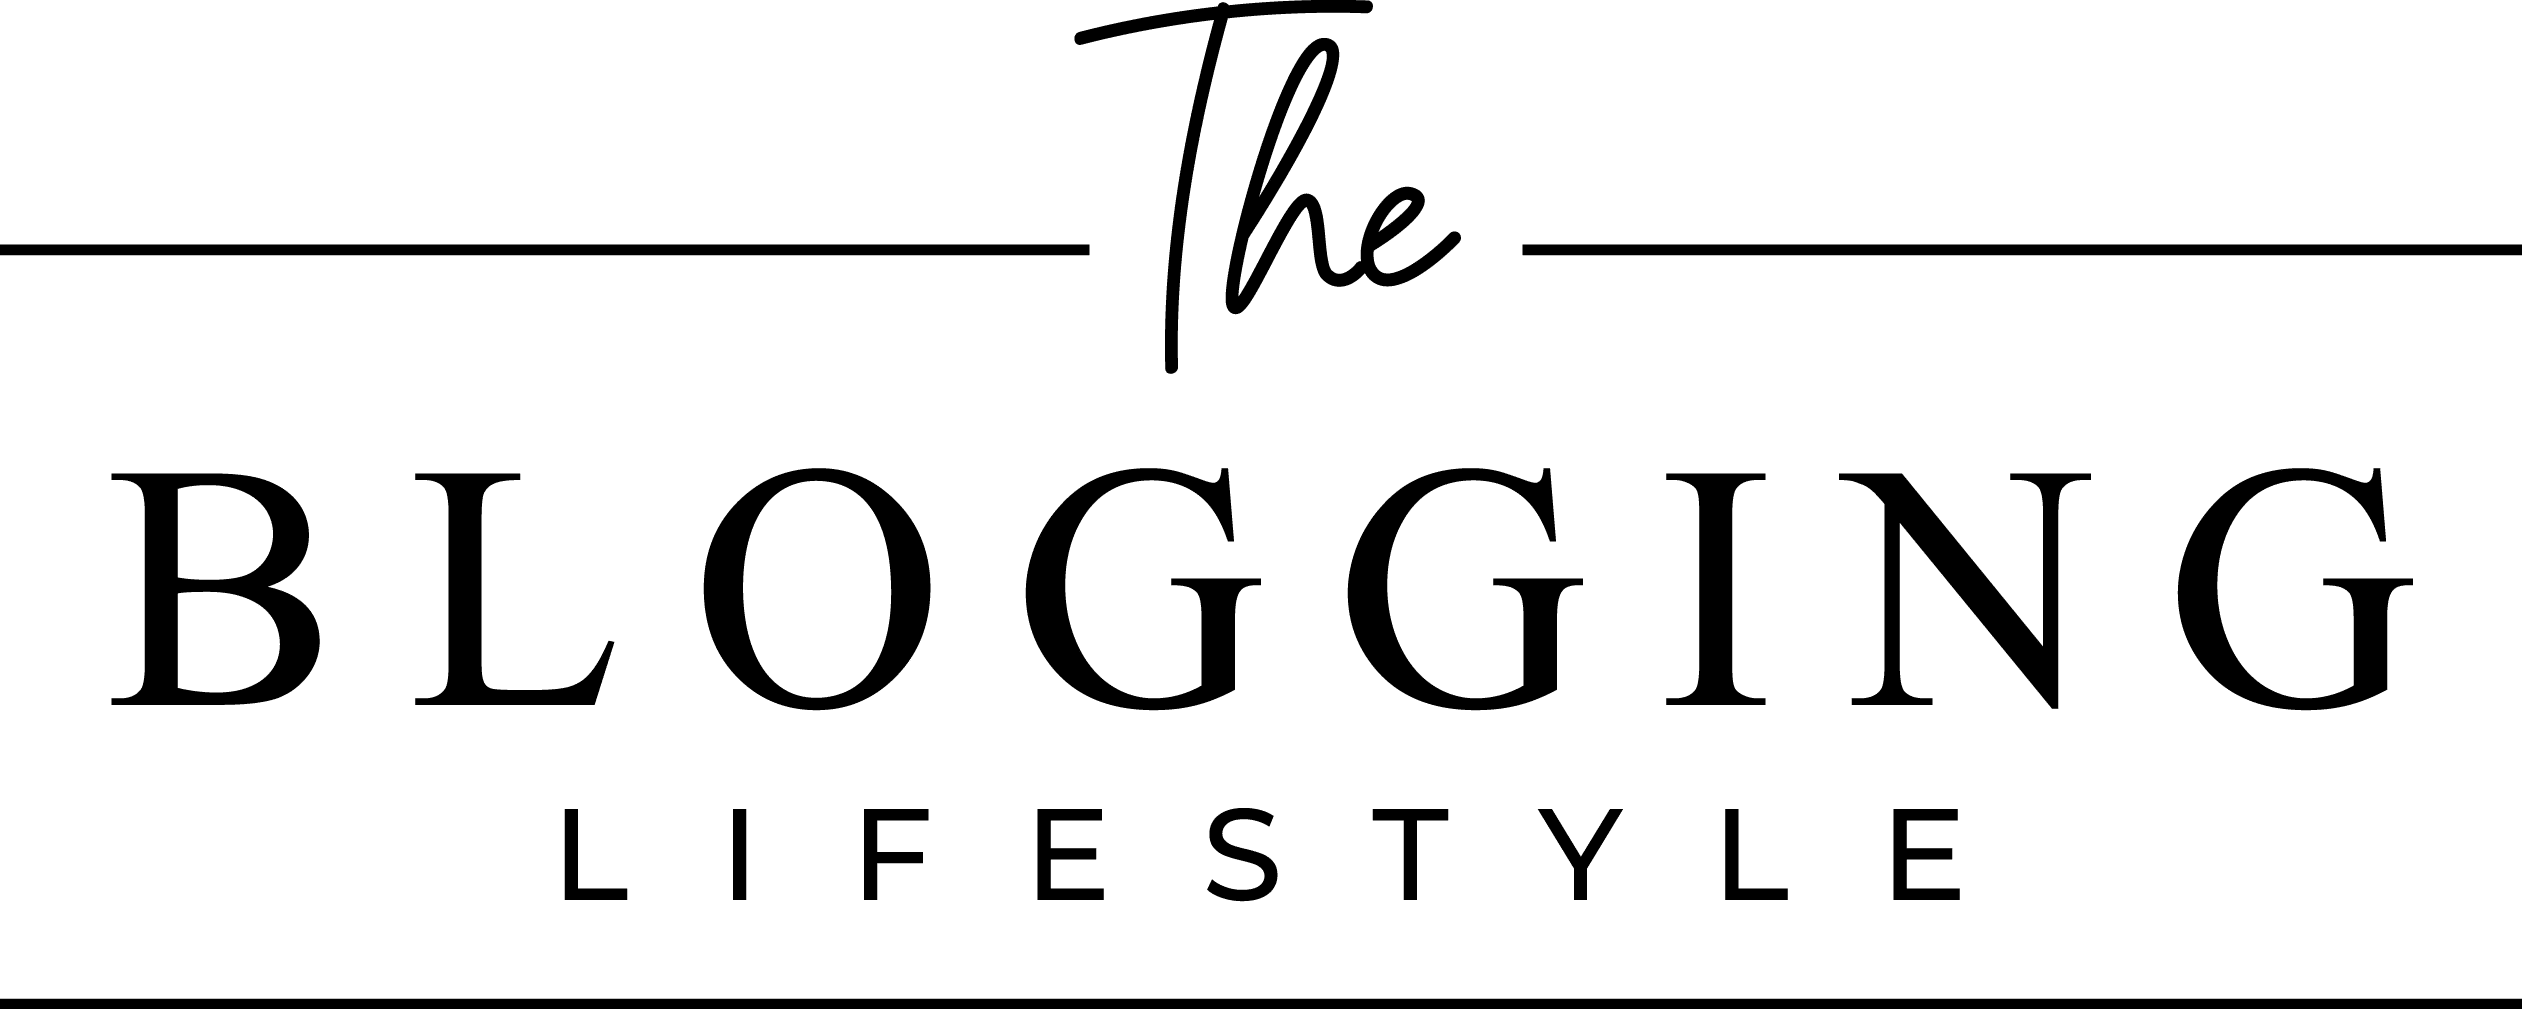 The Blogging Lifestyle blog logo.